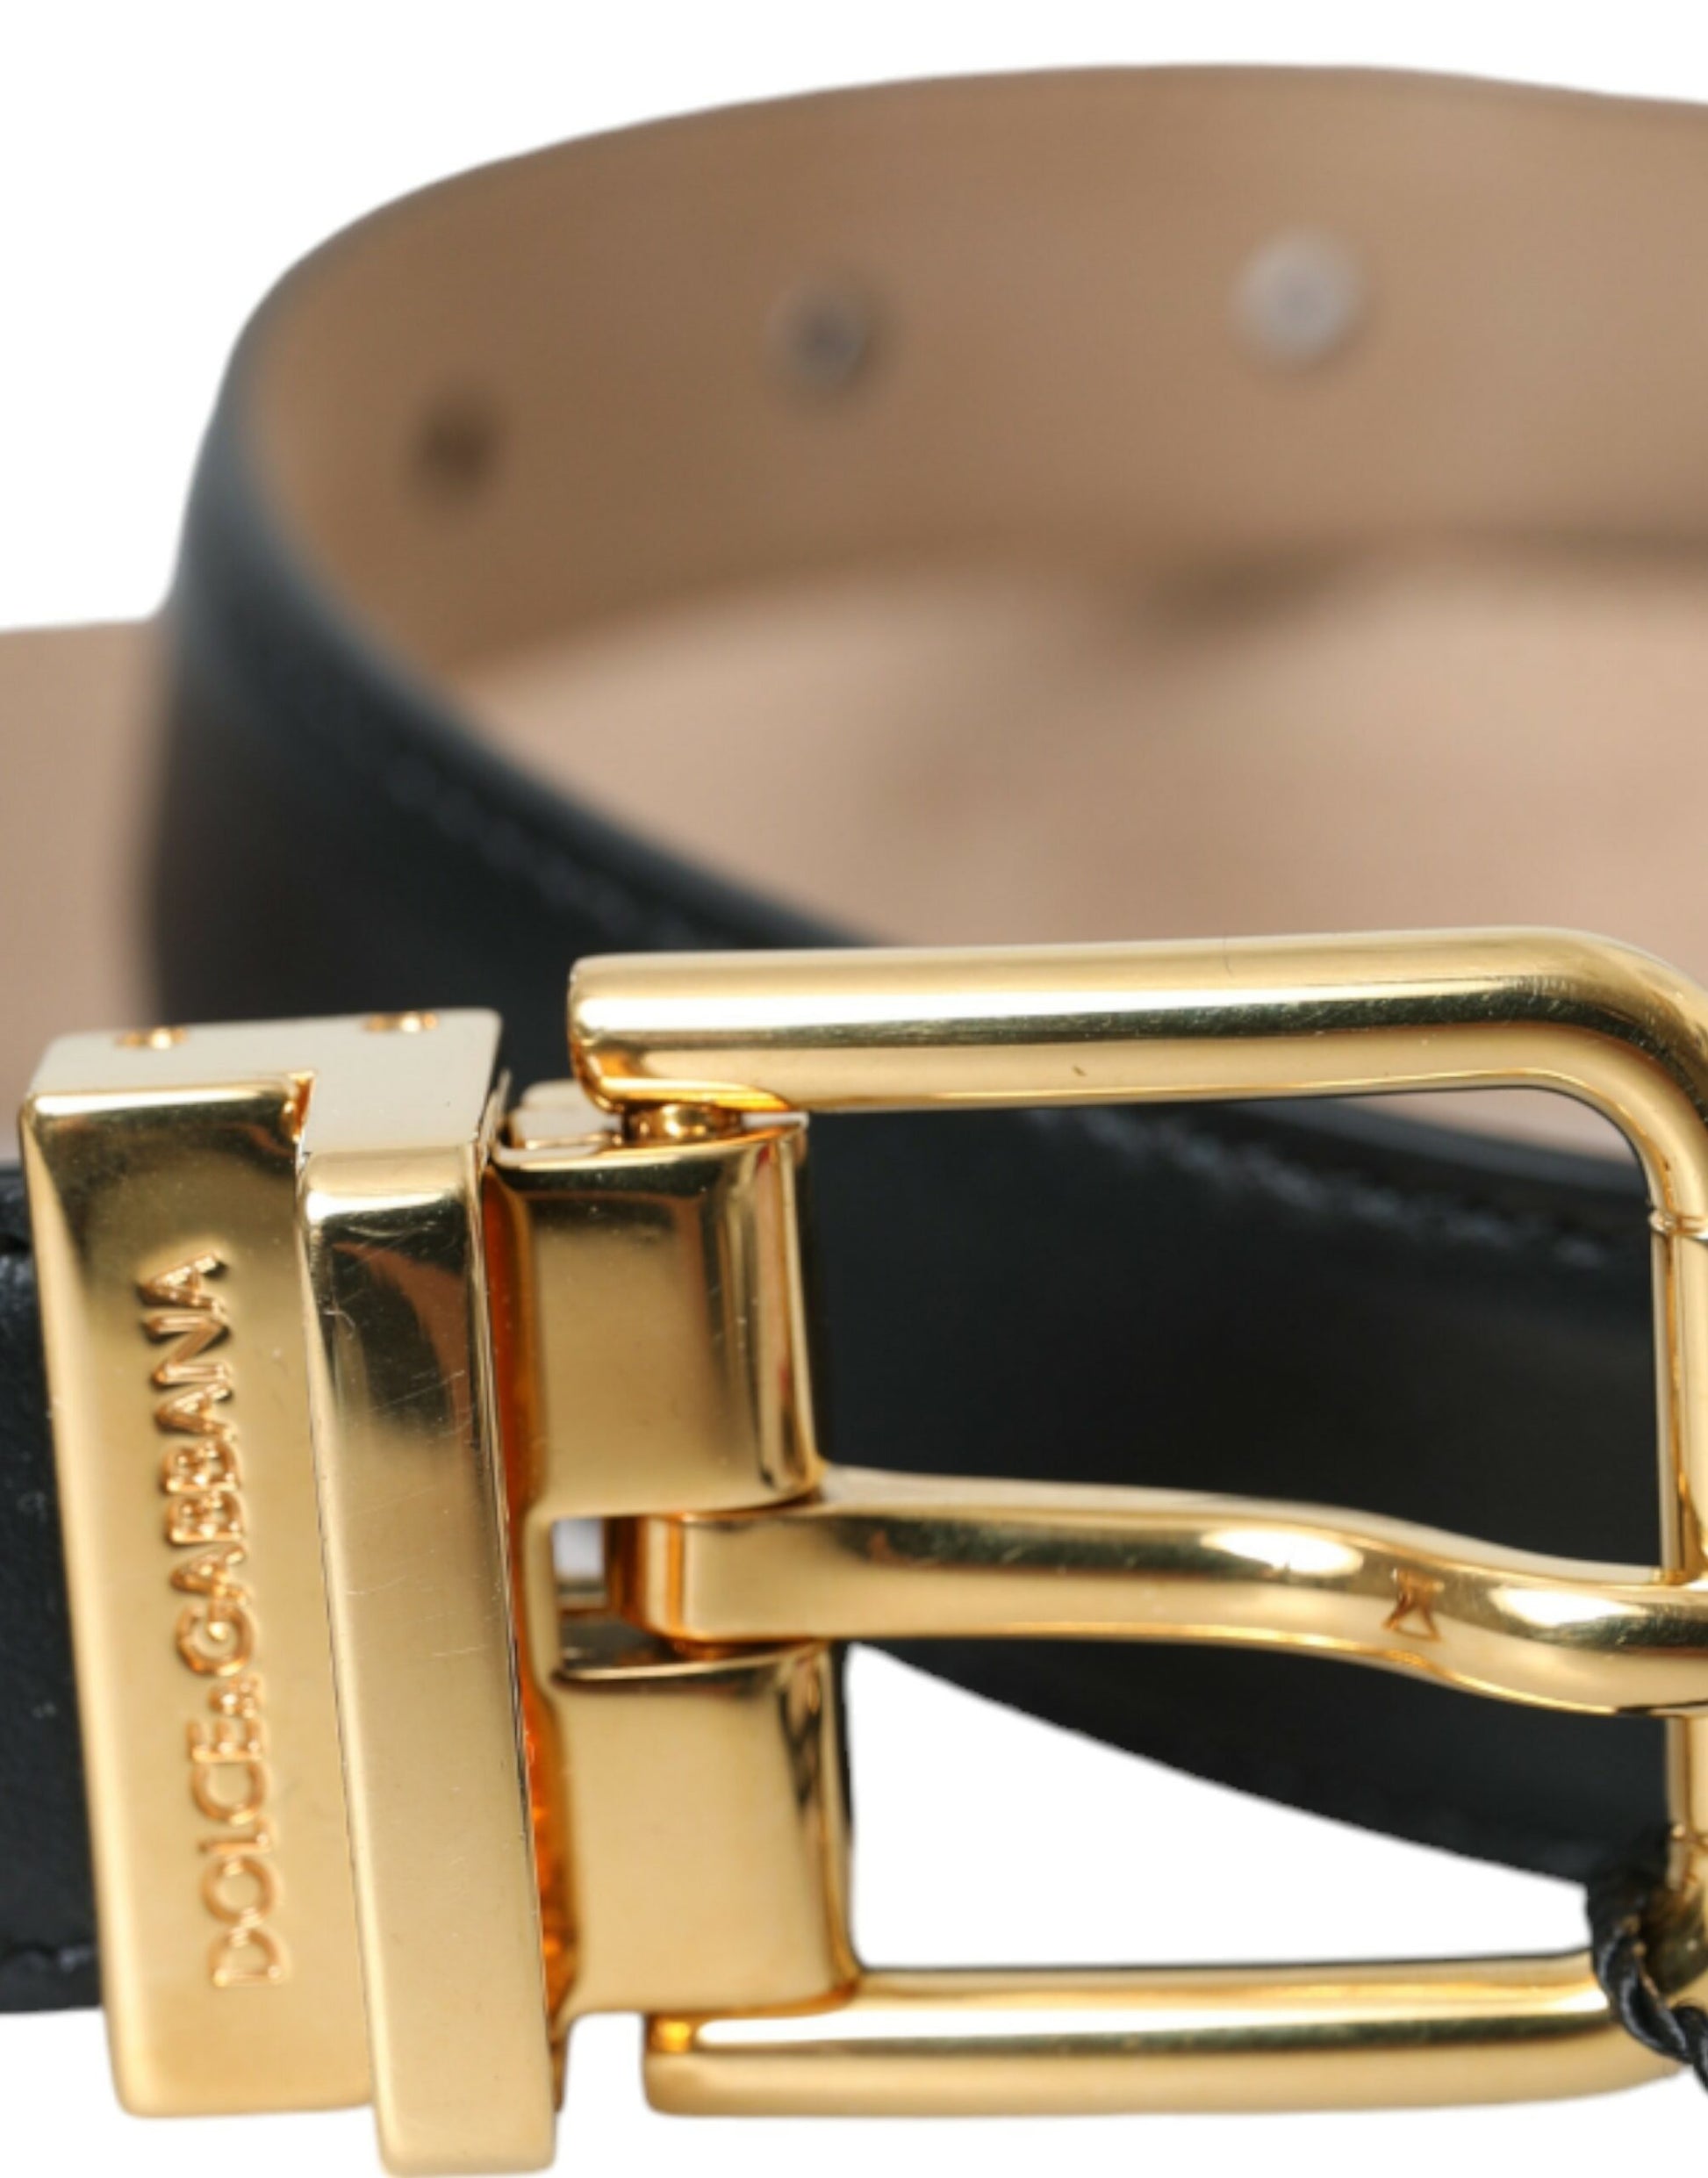 Fashionsarah.com Fashionsarah.com Dolce & Gabbana Black Leather Gold Metal Buckle Belt Men